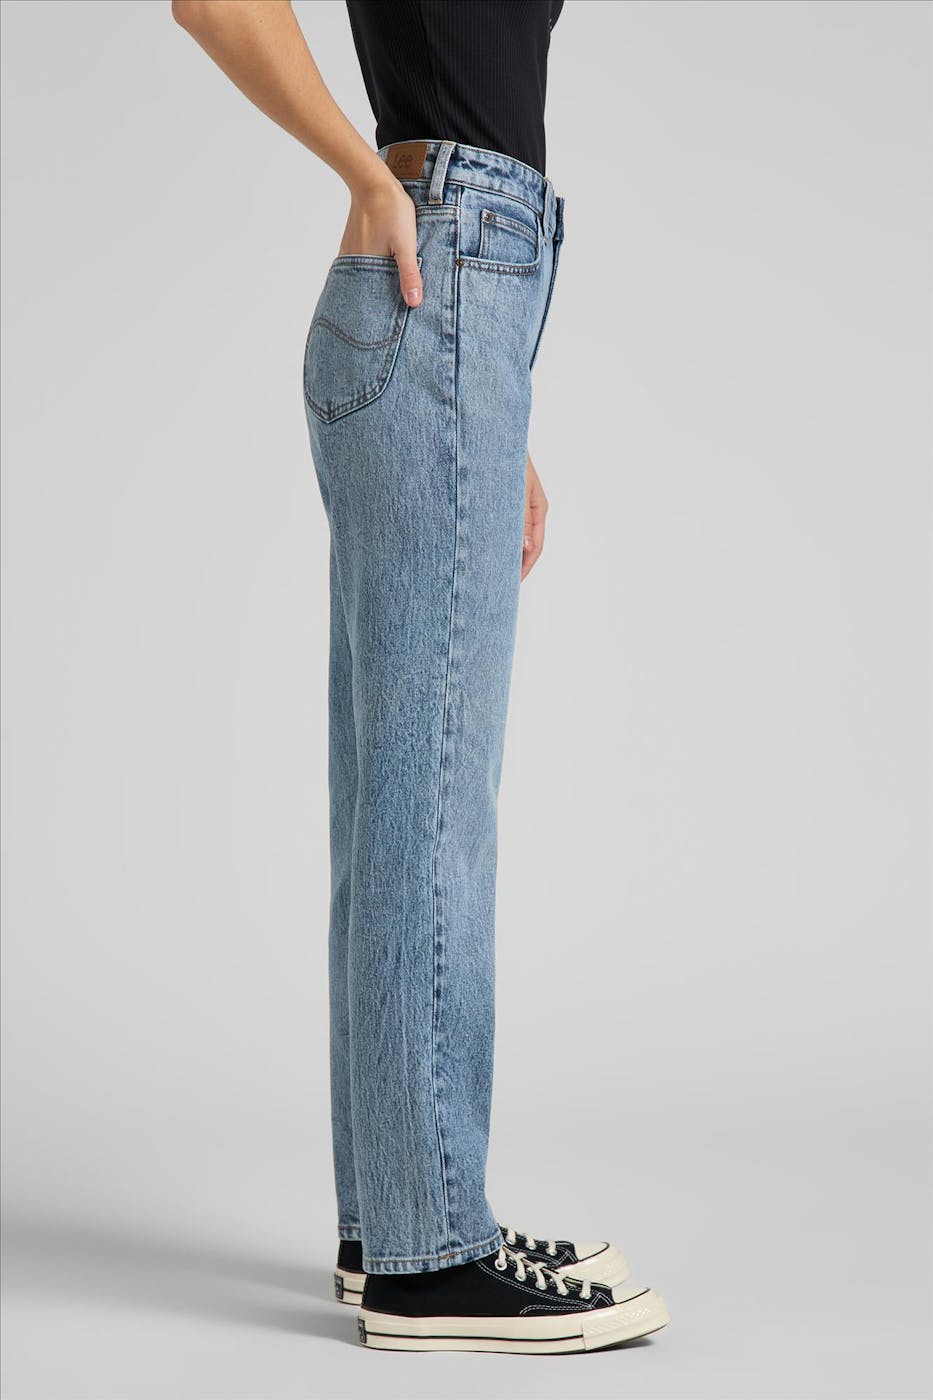 Lee - Grijsblauwe Carol straight jeans